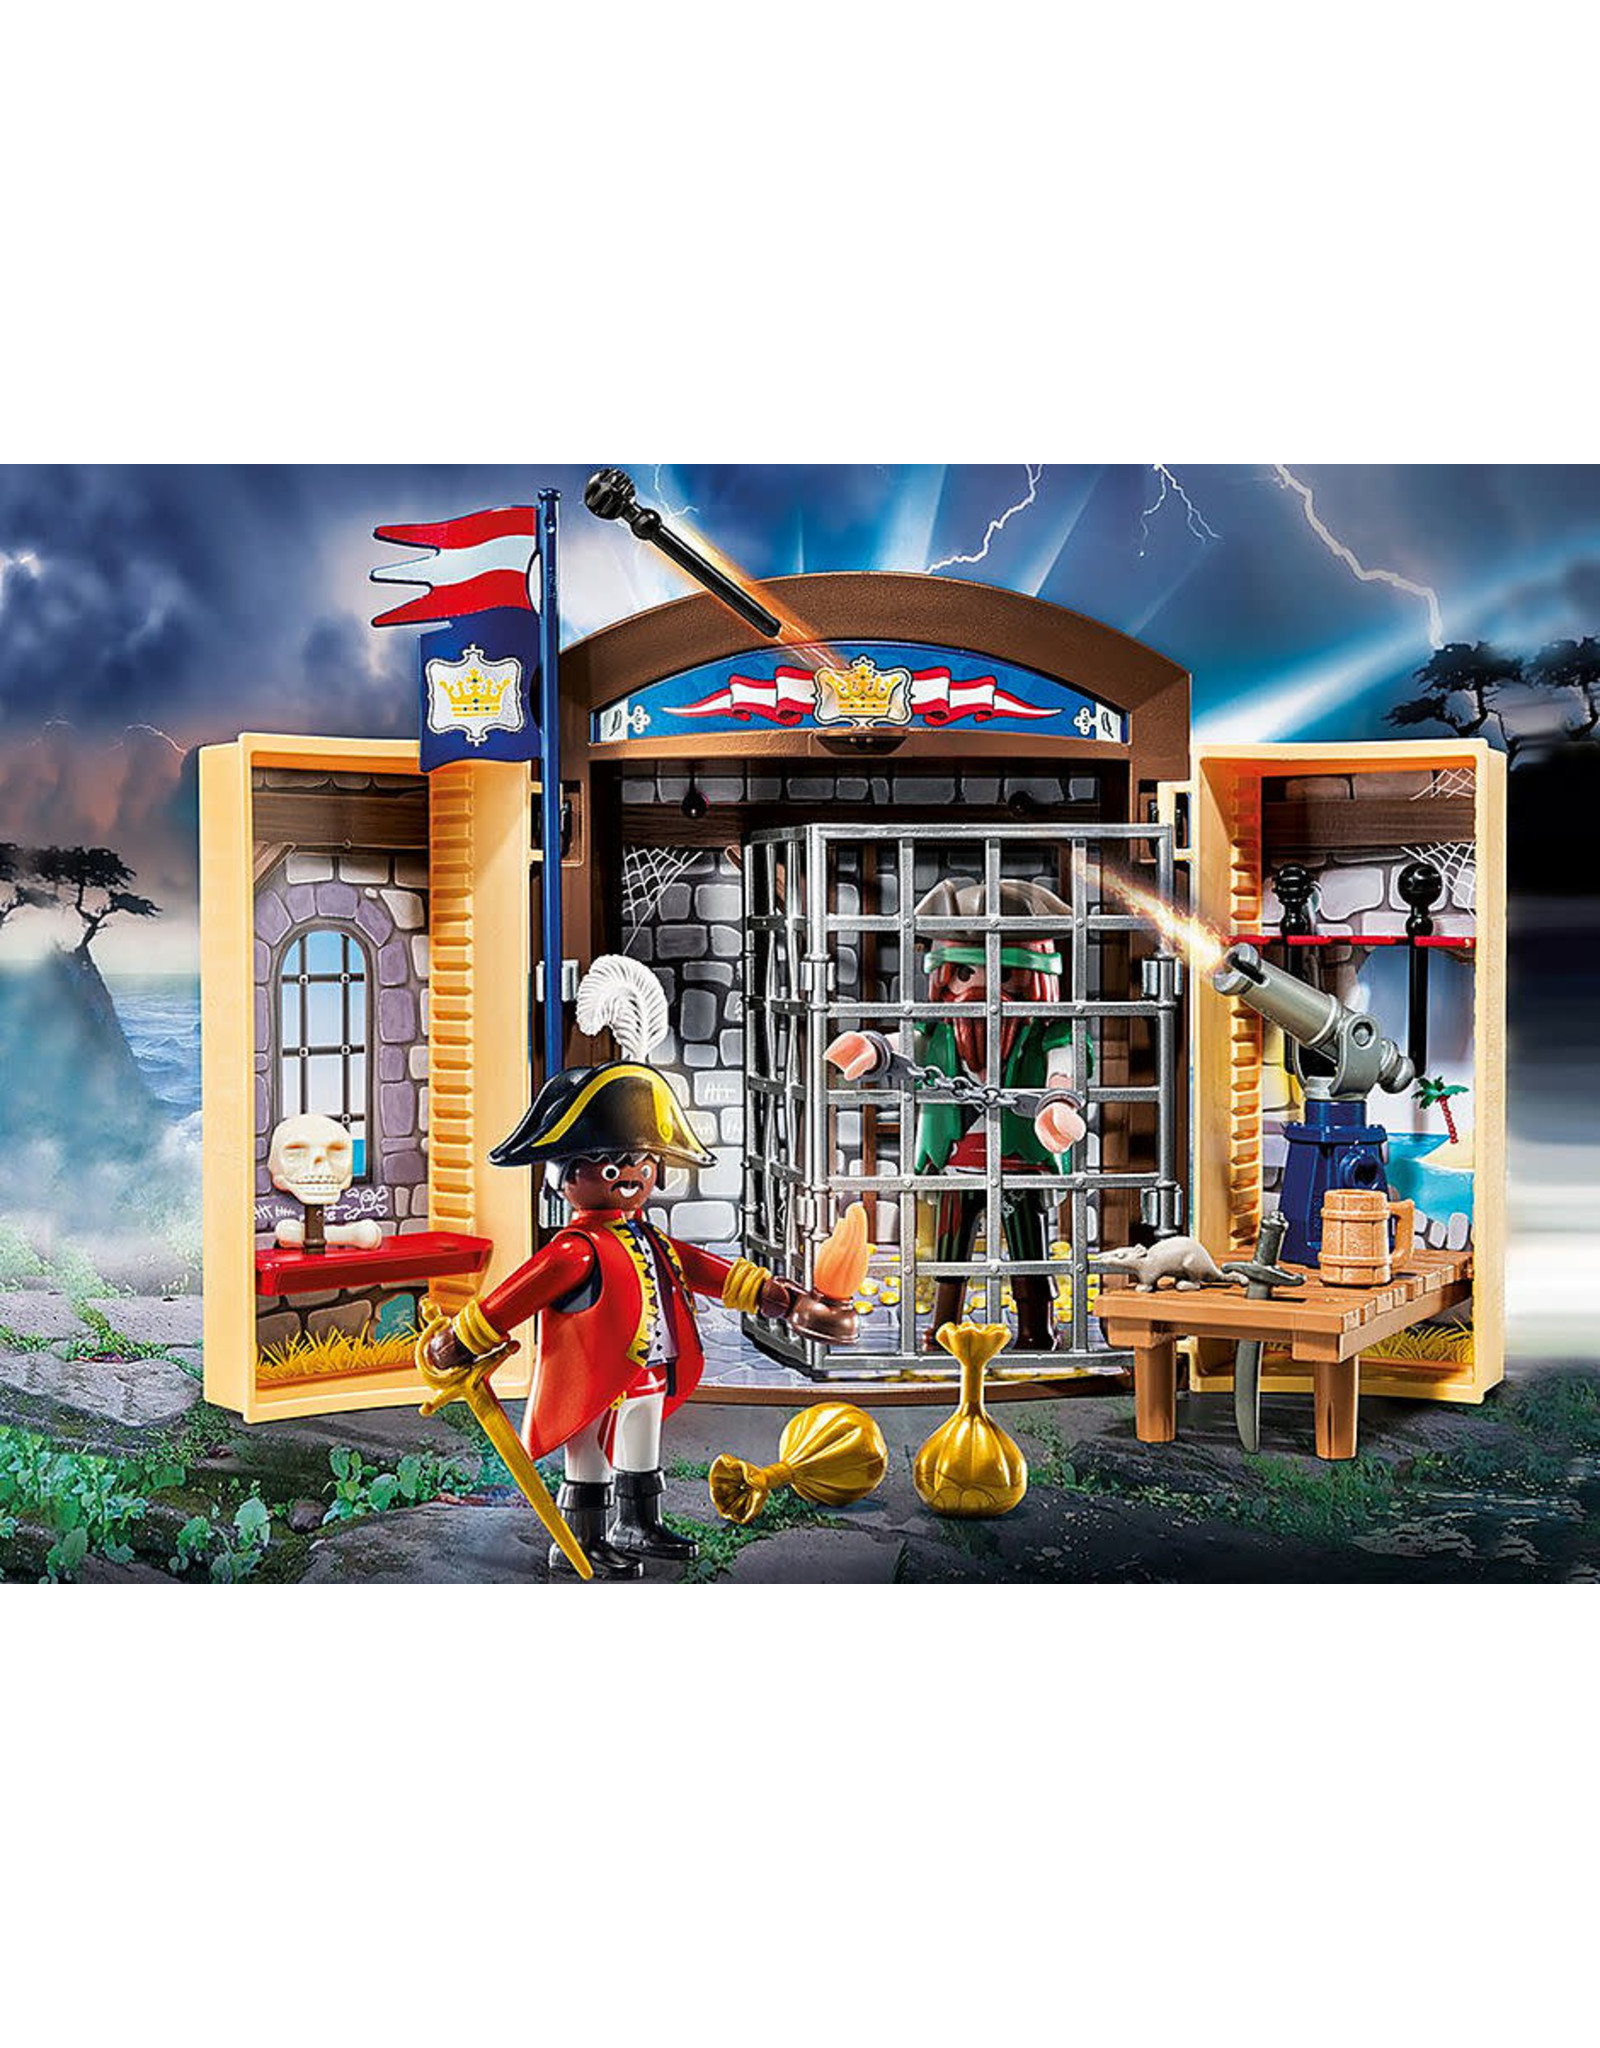 Playmobil Pirate Adventure Play Box